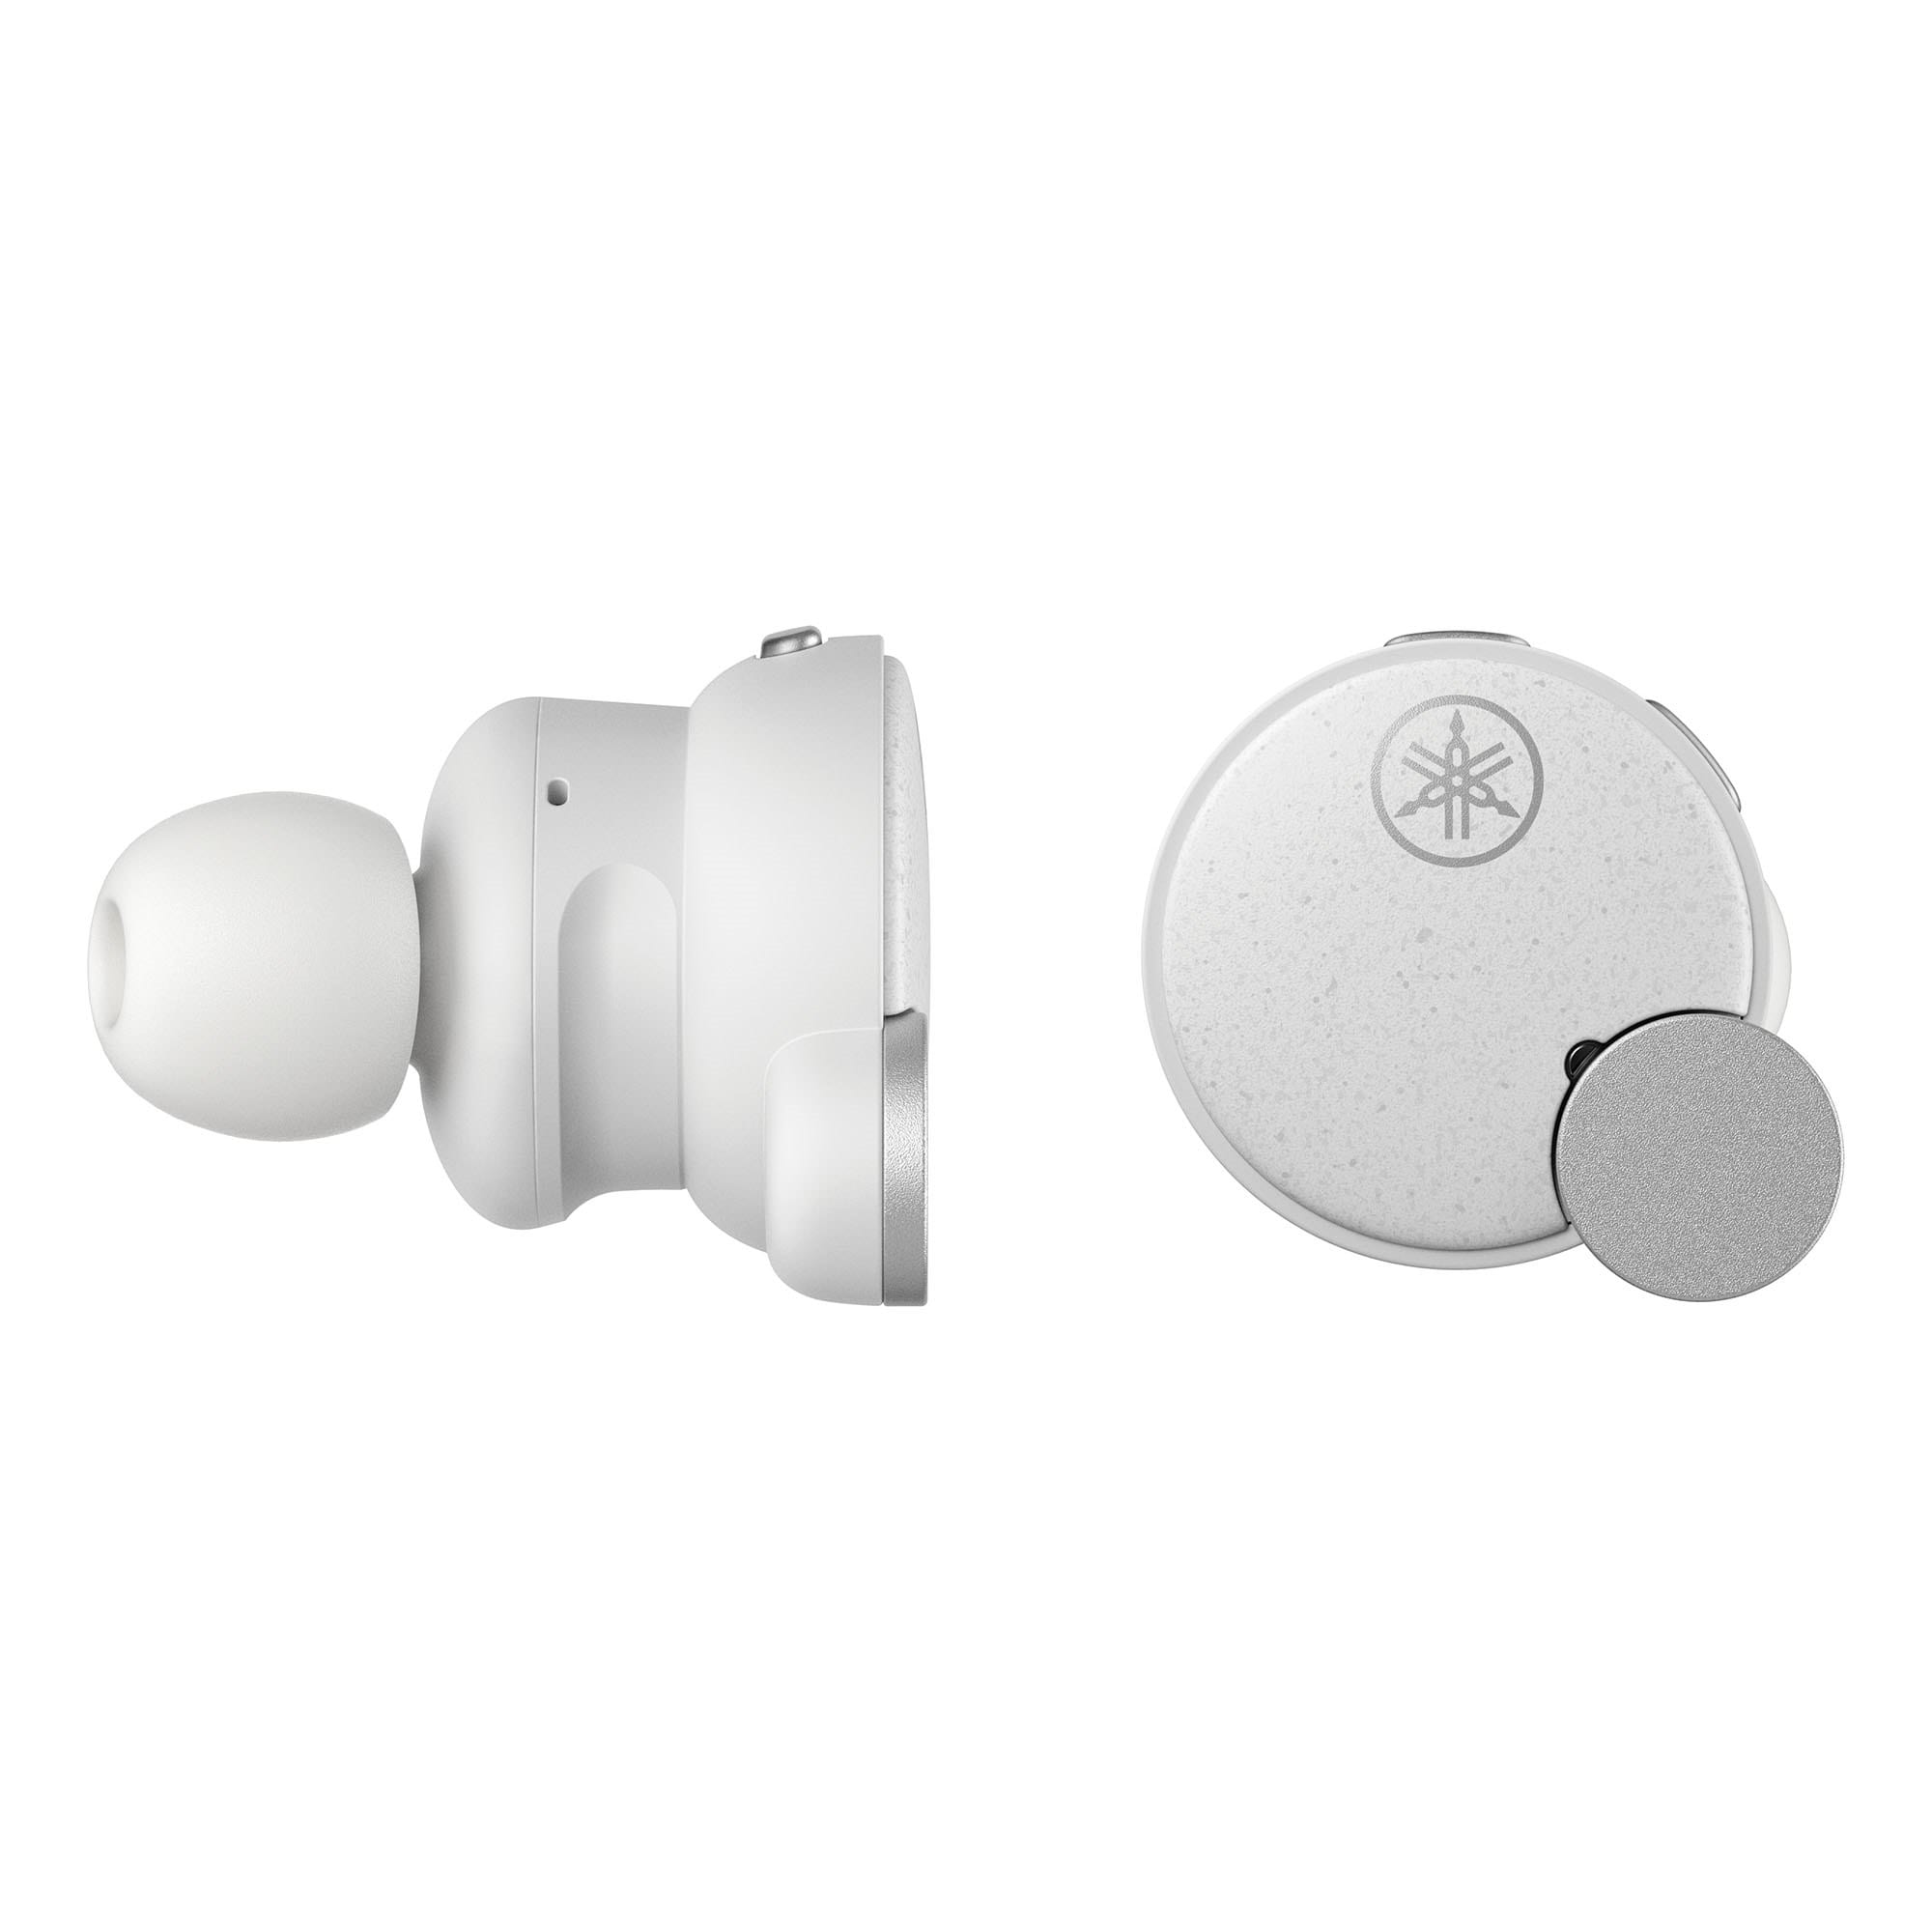 TW-E7B - Overview - Headphones & Earphones - Audio & Visual 